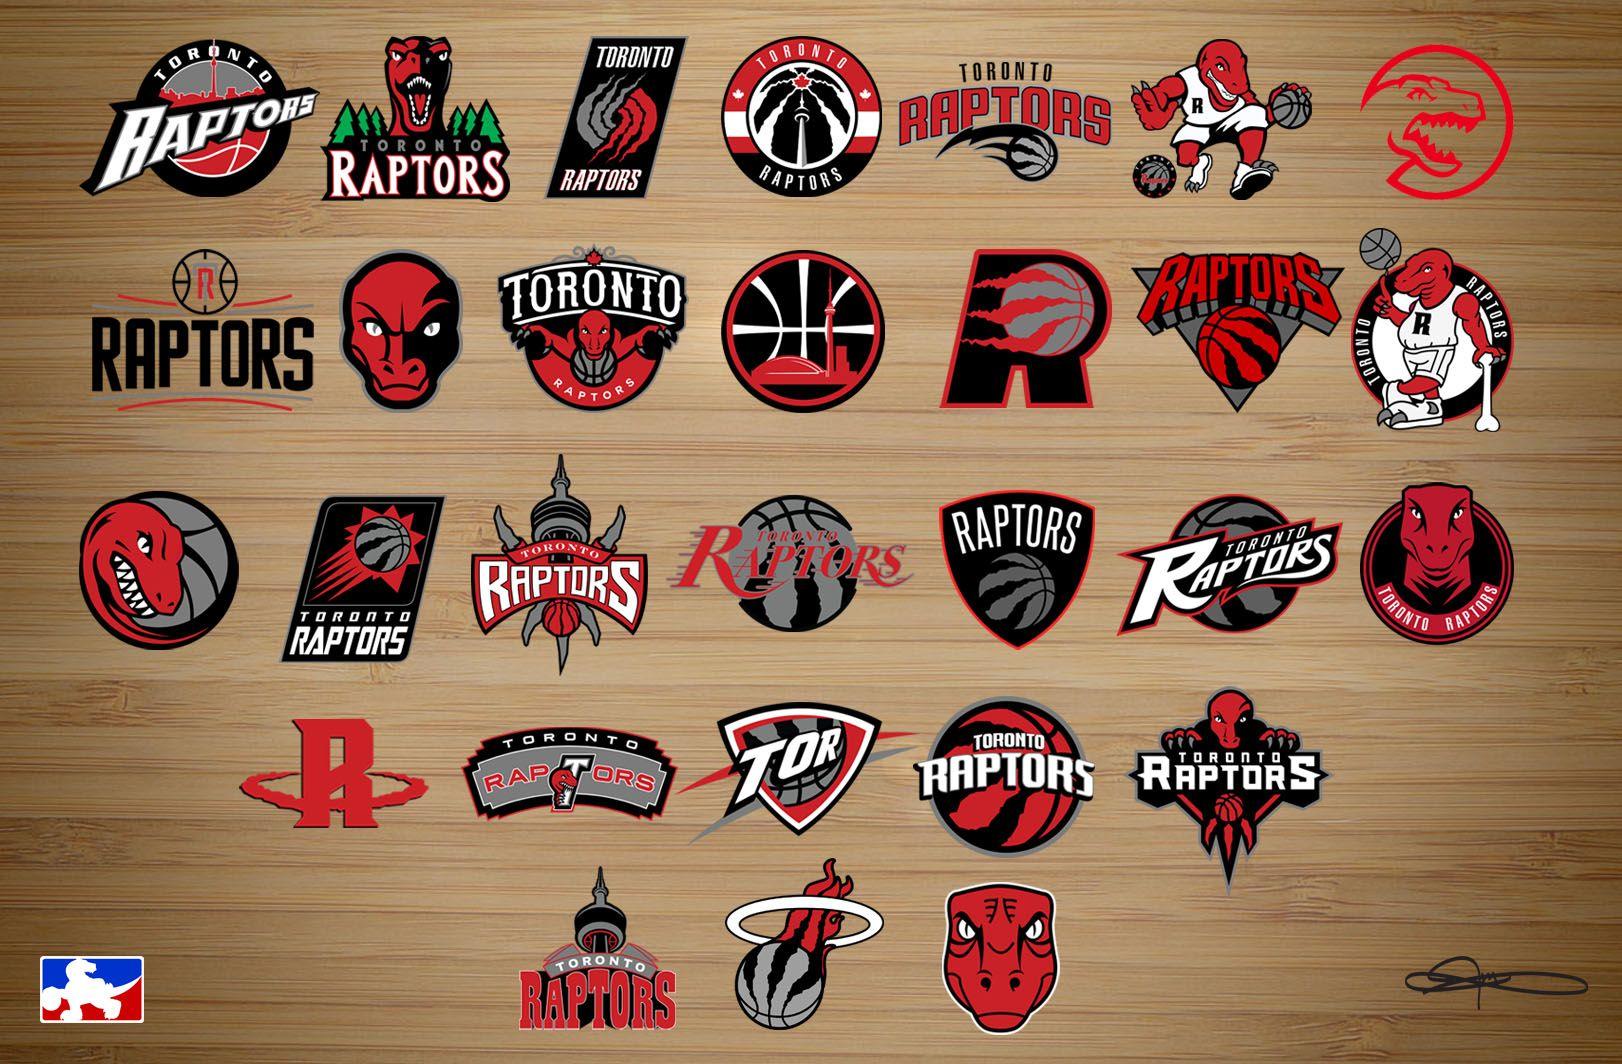 Cool Raptors Logo - Raptors for every team